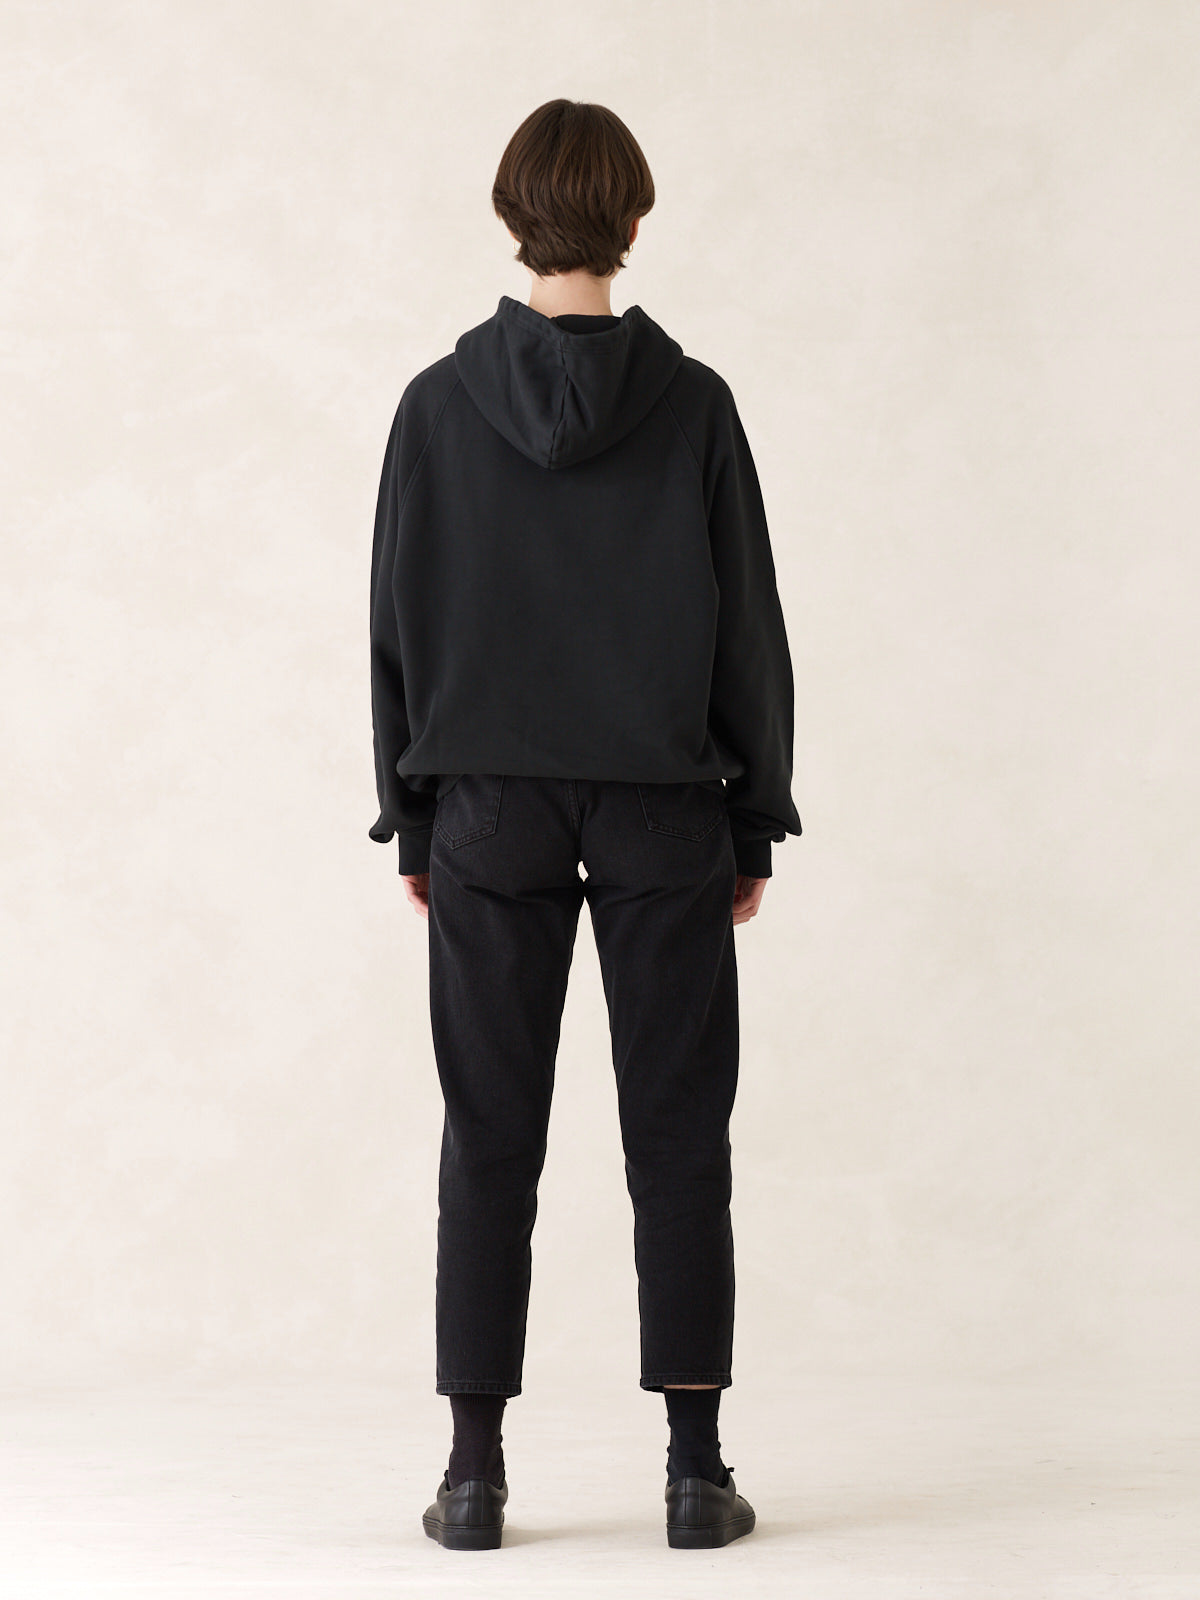 03 / Oftt Heavyweight Hooded Sweatshirt / Black